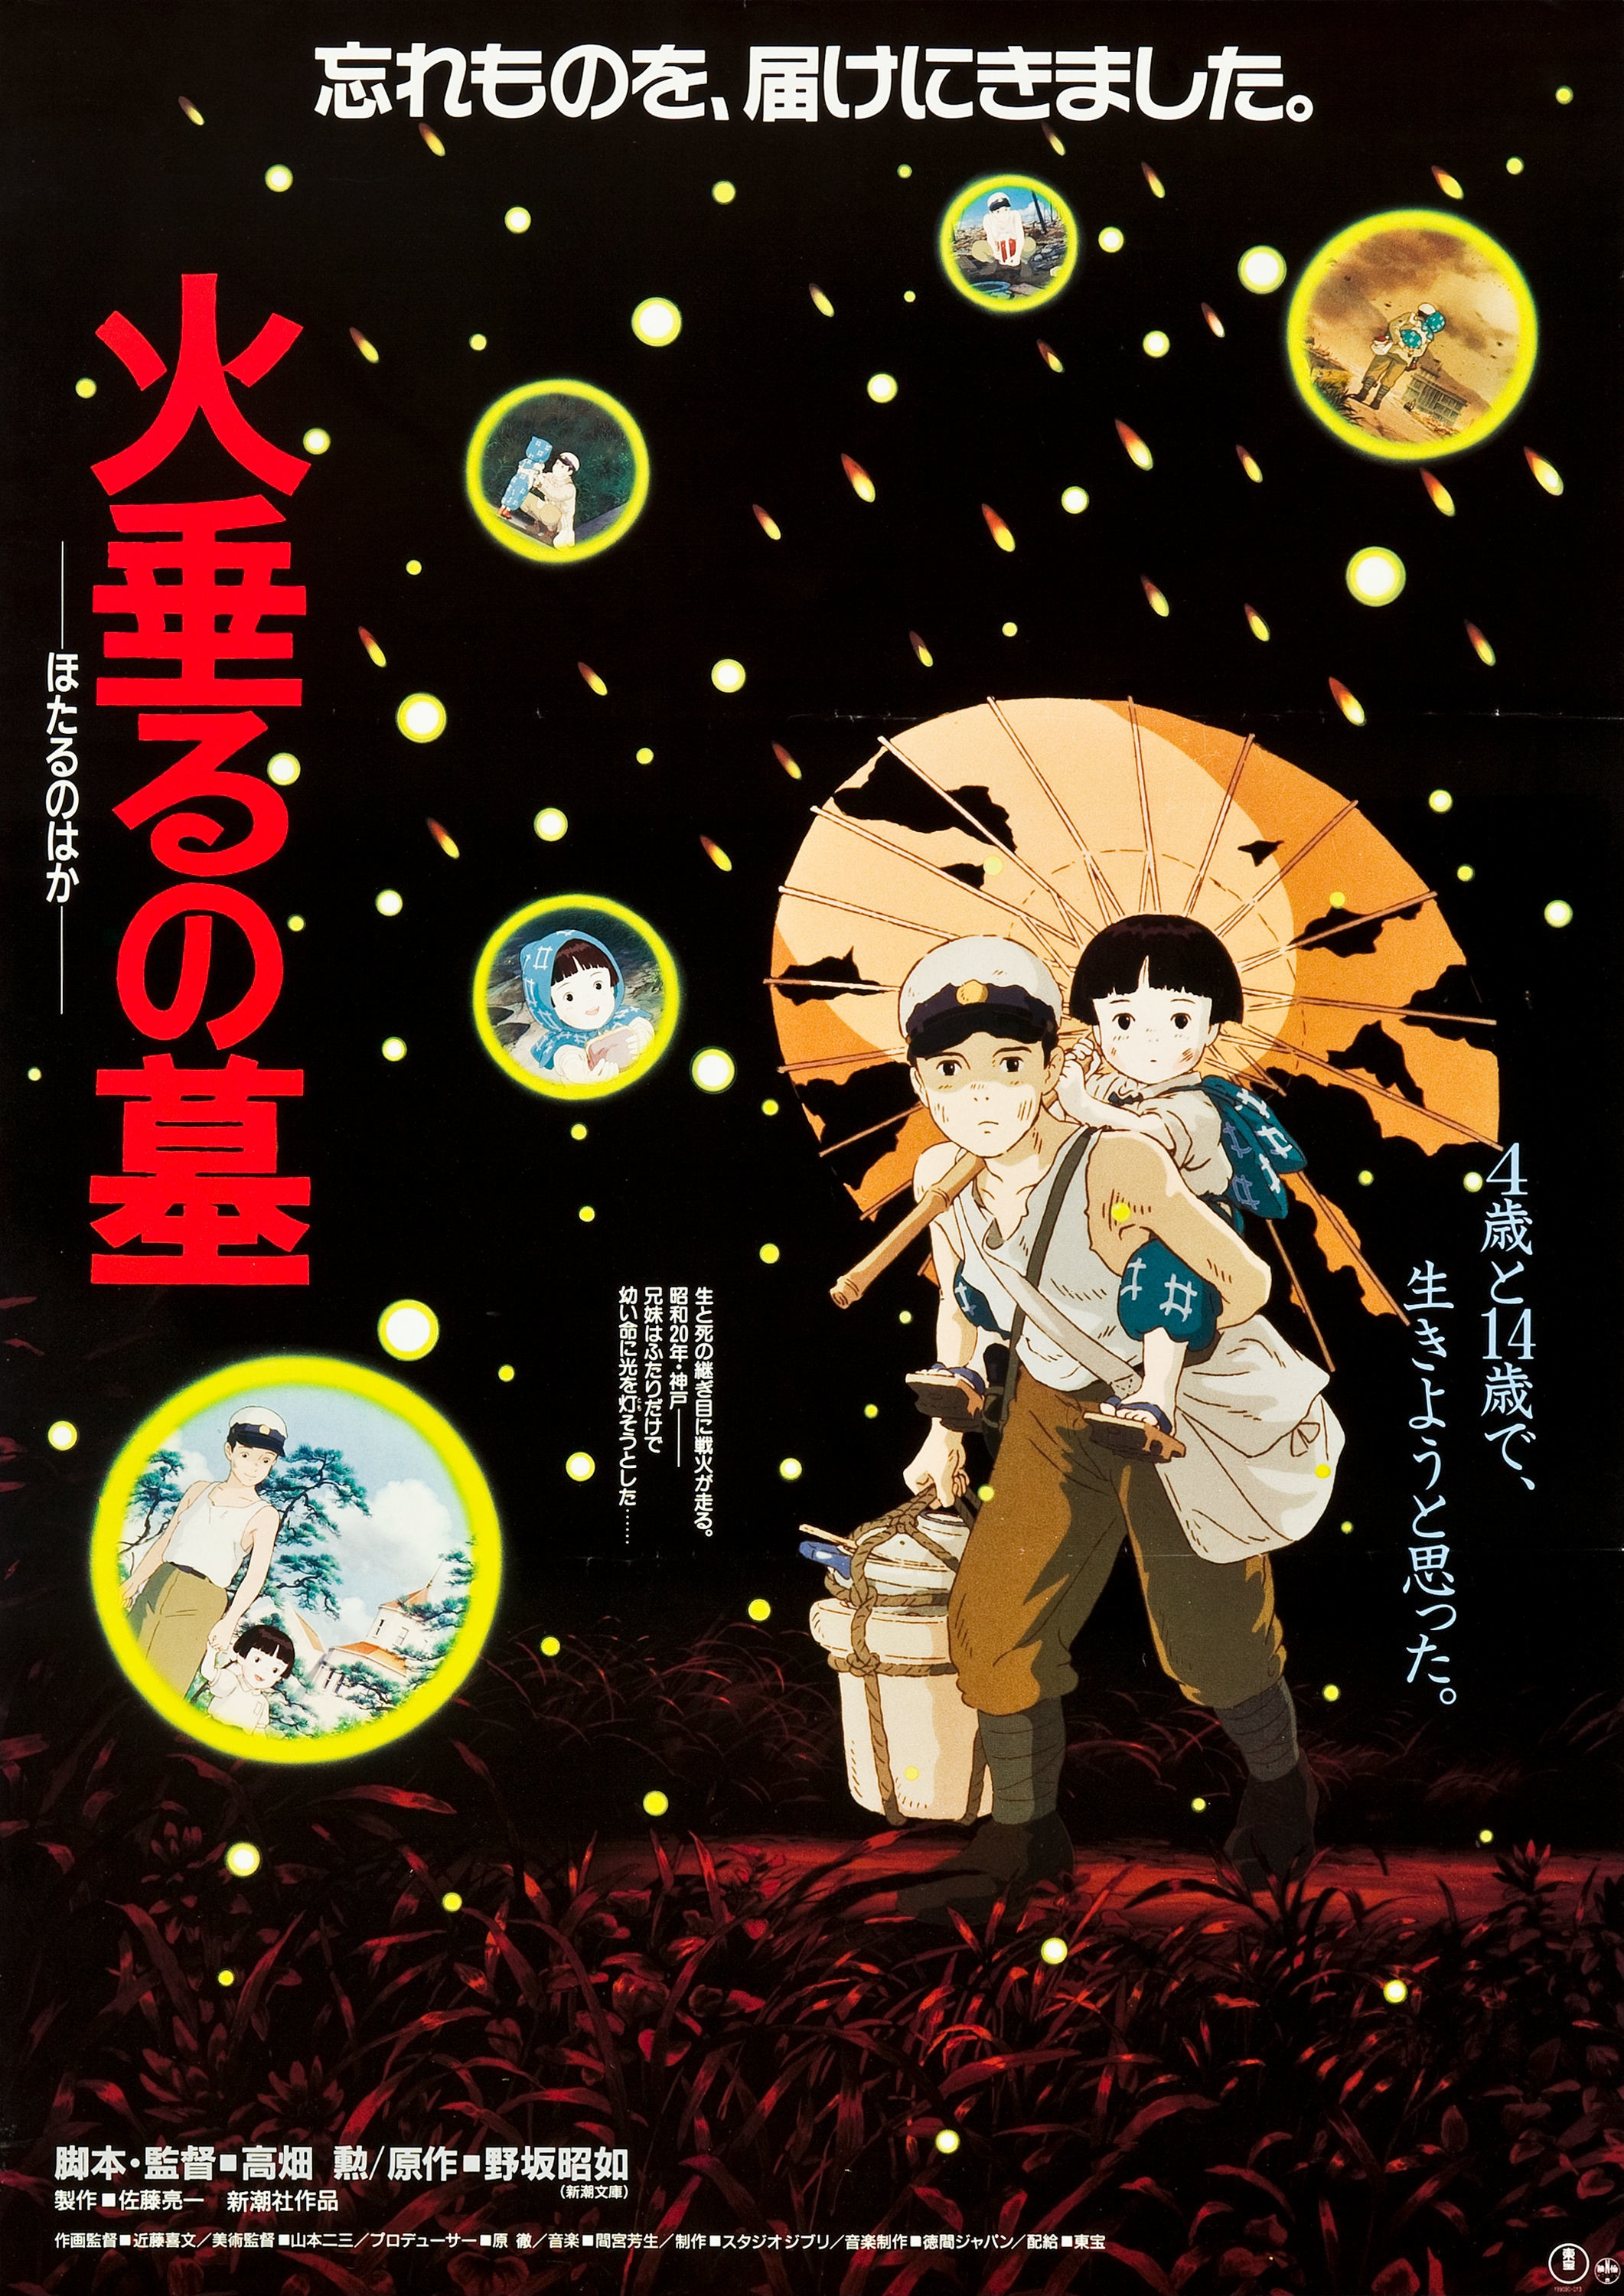 Corinne Orr, Ayano Shiraishi, Tsutomu Tatsumi, J. Robert Spencer, Emily Neves, and Adam Gibbs in Grave of the Fireflies (1988)